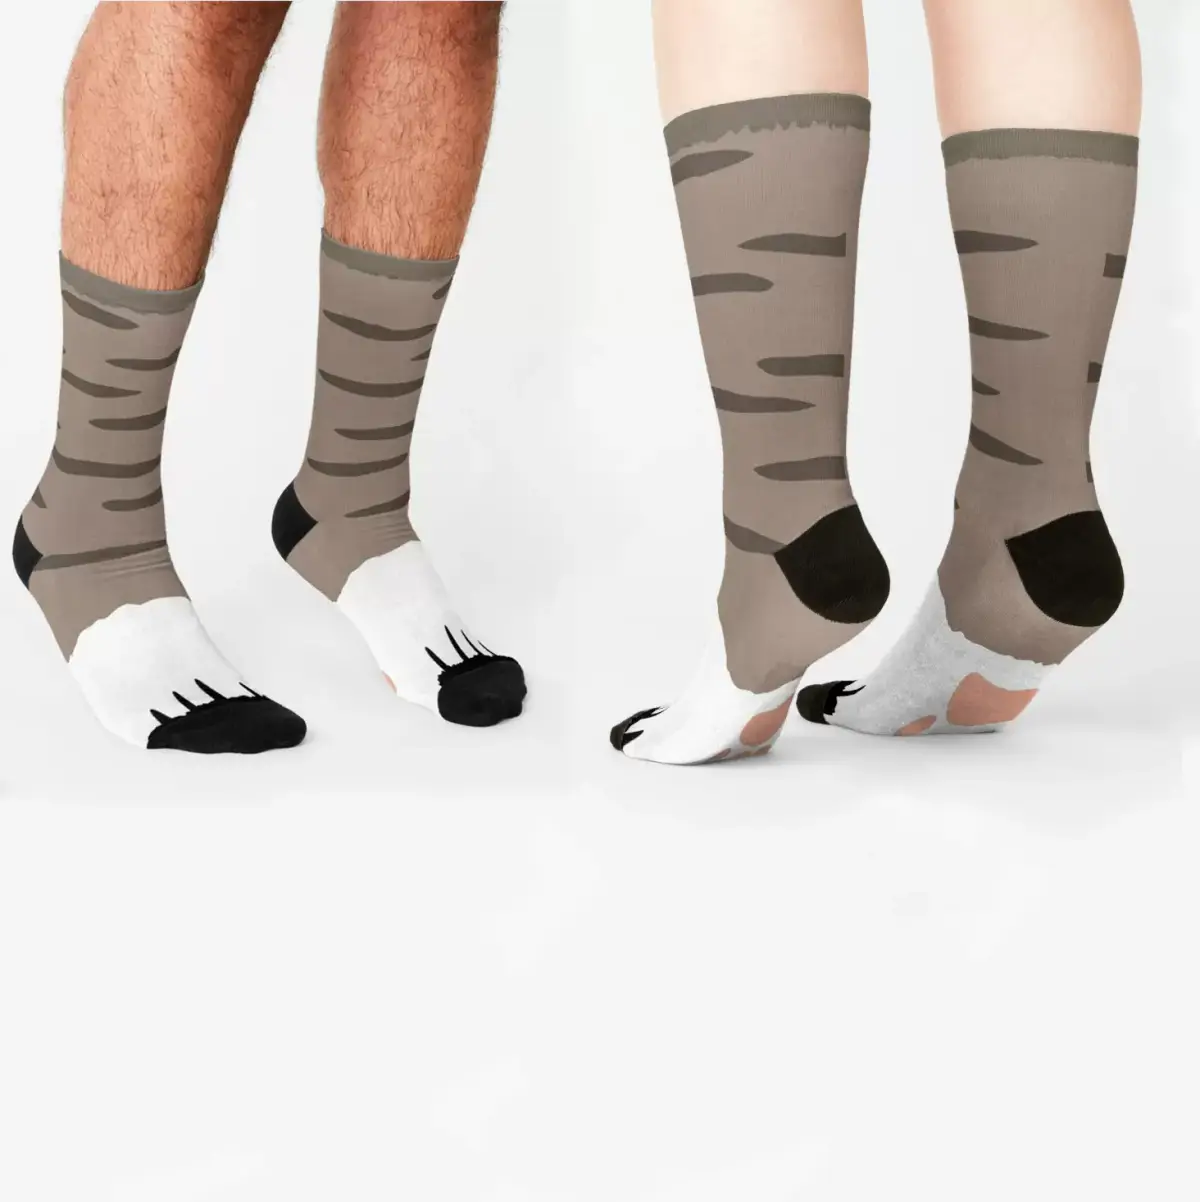 animal feet printing socks (4) - 副本.jpg